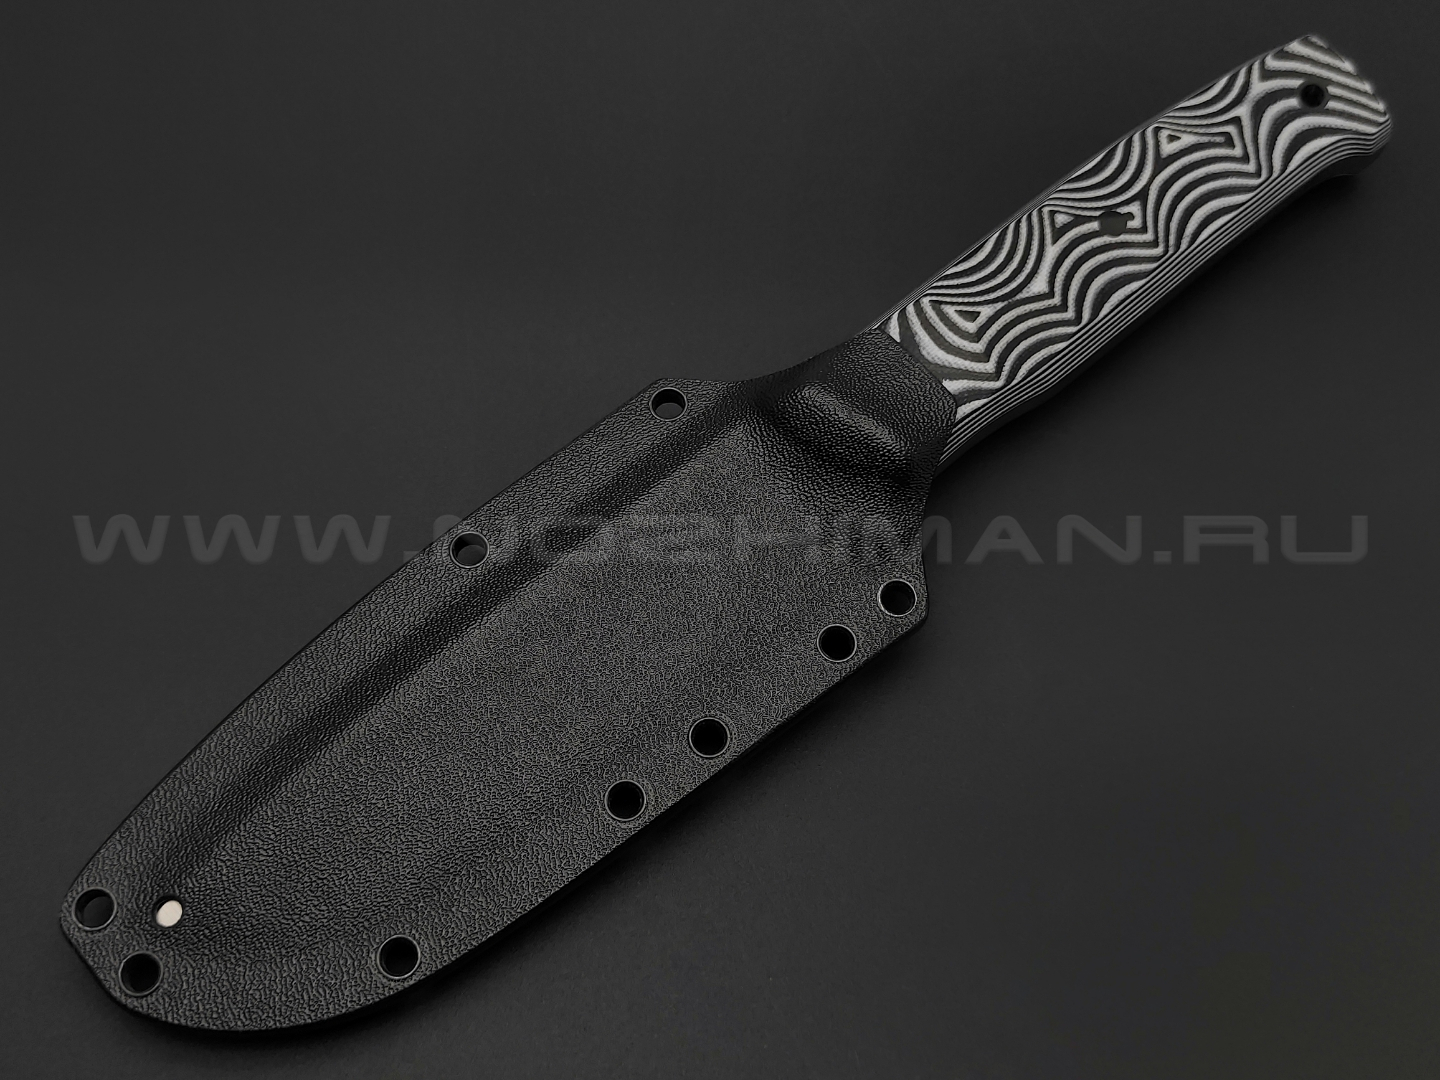 Волчий Век нож Wolfkniven сталь 95х18 WA, рукоять G10 black & white